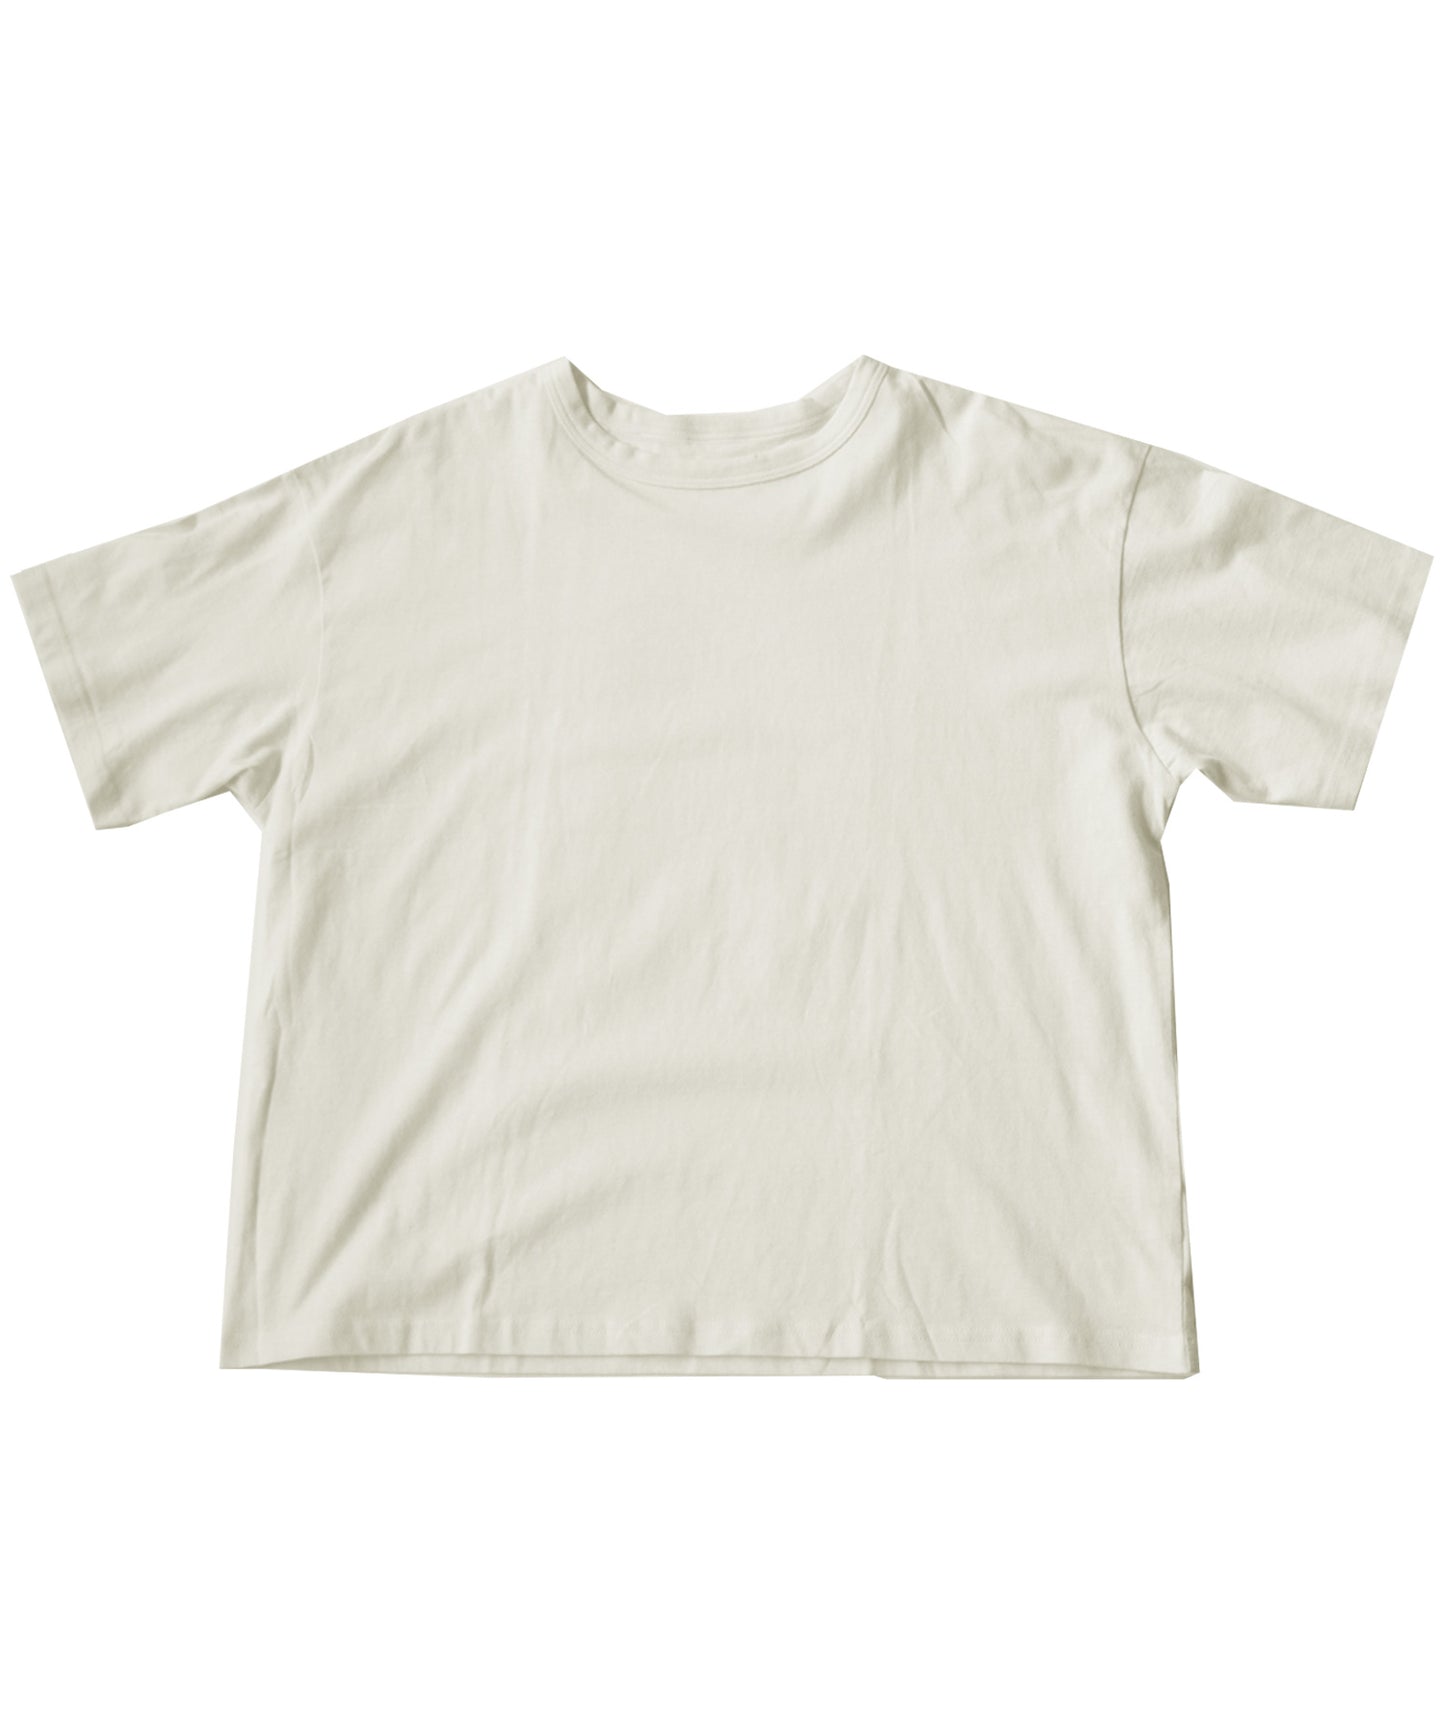 100%Cotton Short Sleeve T-Shirt Ladies